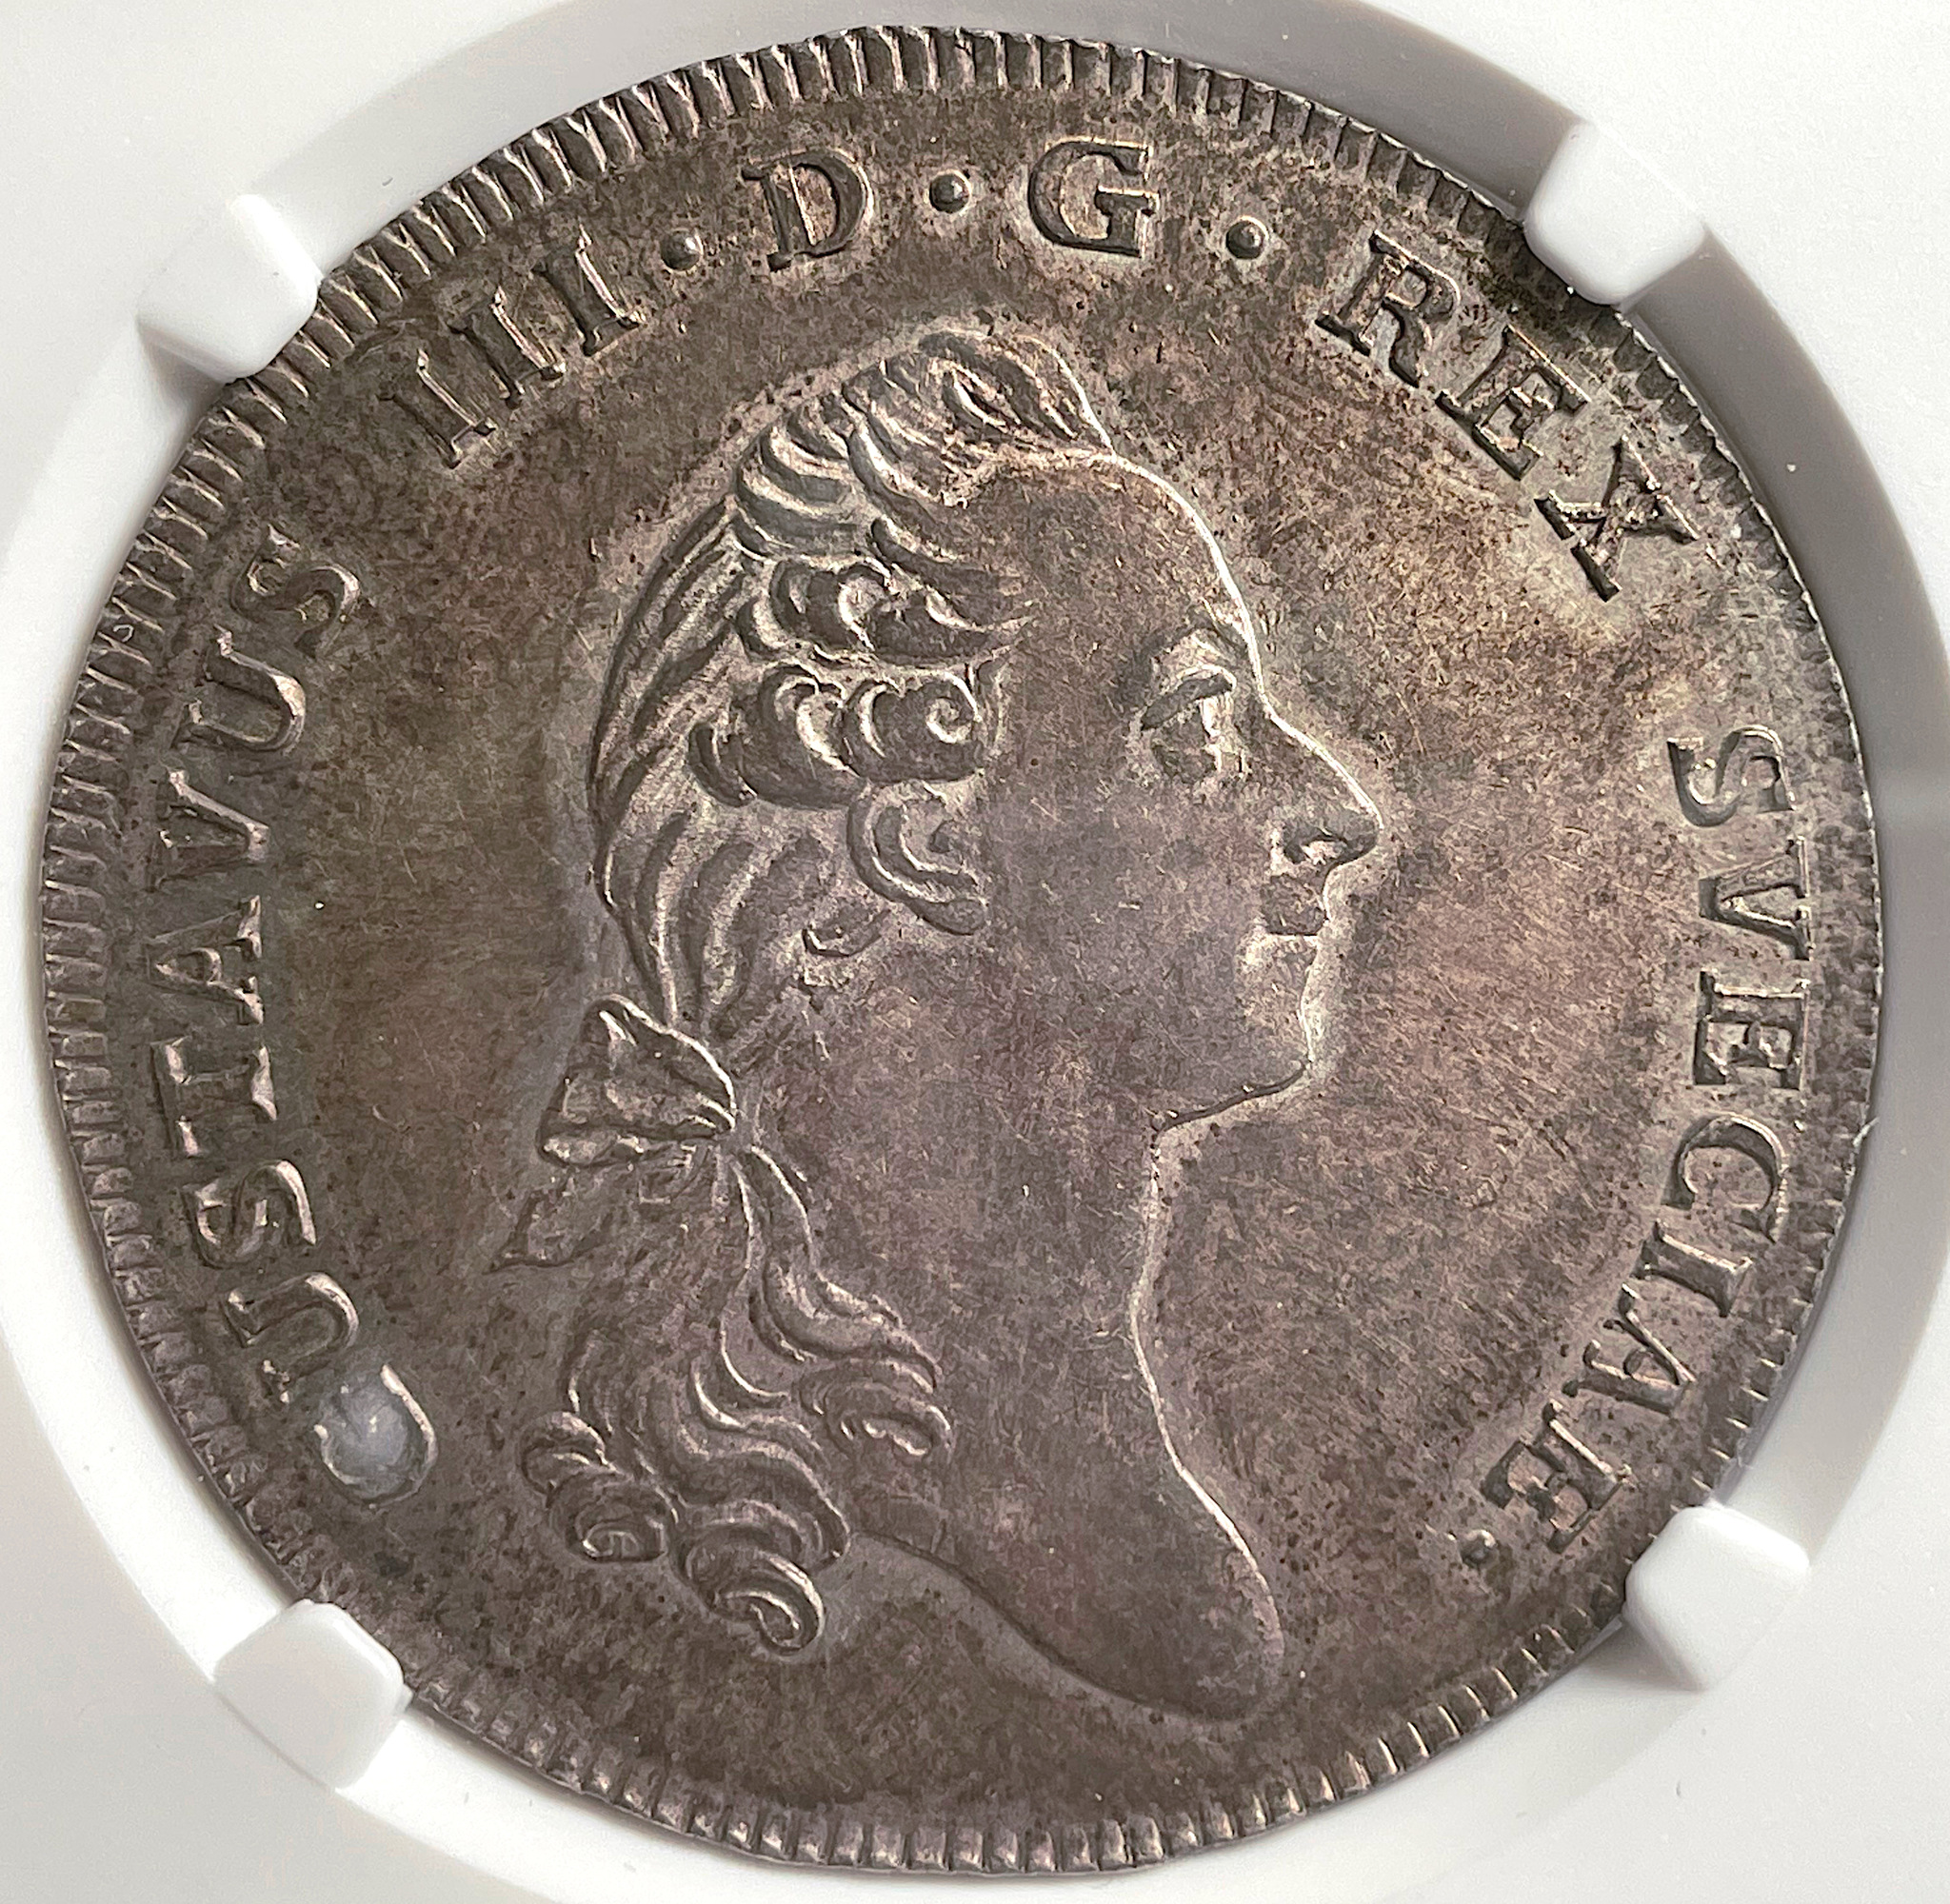 Gustav III, Riksdaler 1781 - NGC AU58 - Vackert exemplar